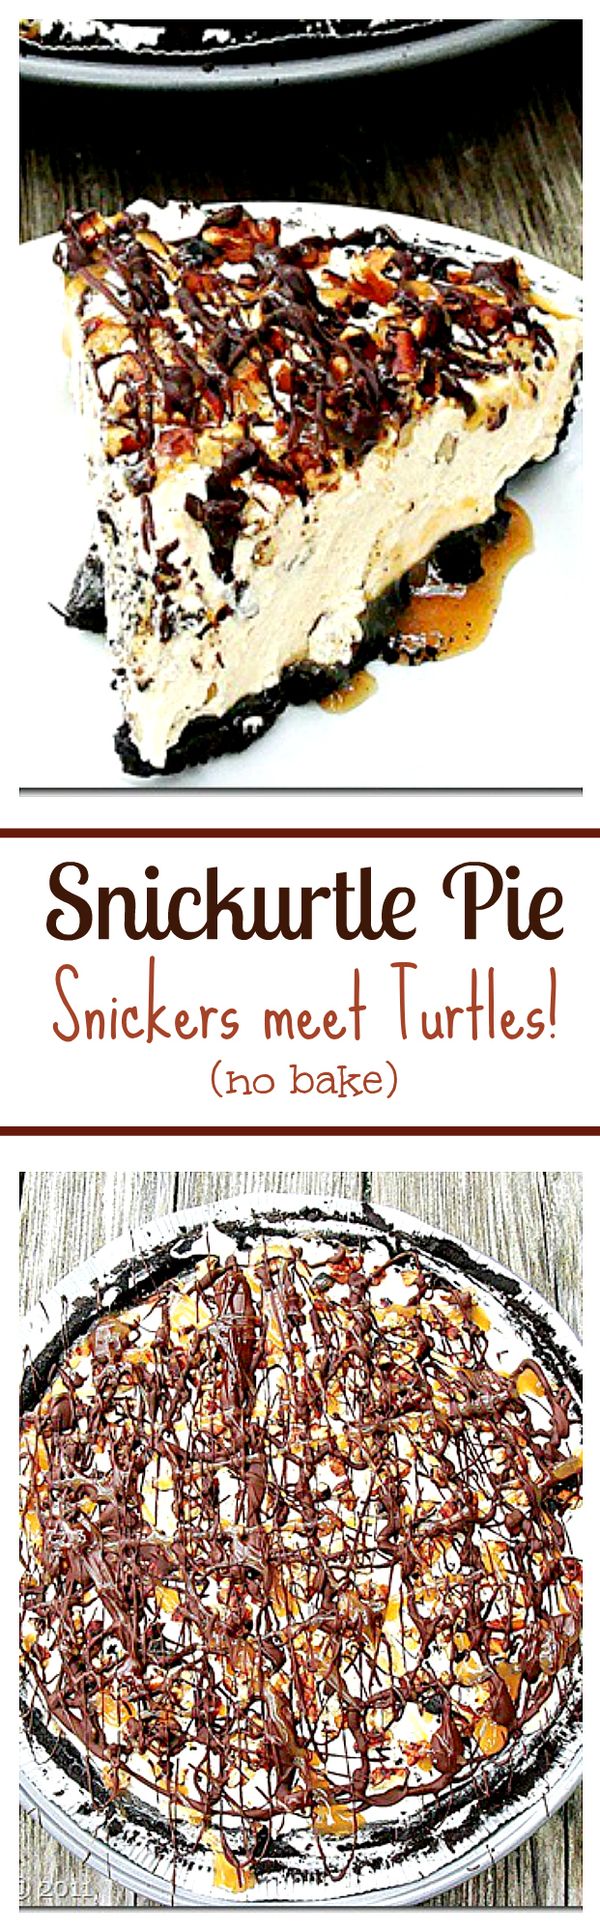 Snickurtle Pie: Snickers meet Turtles